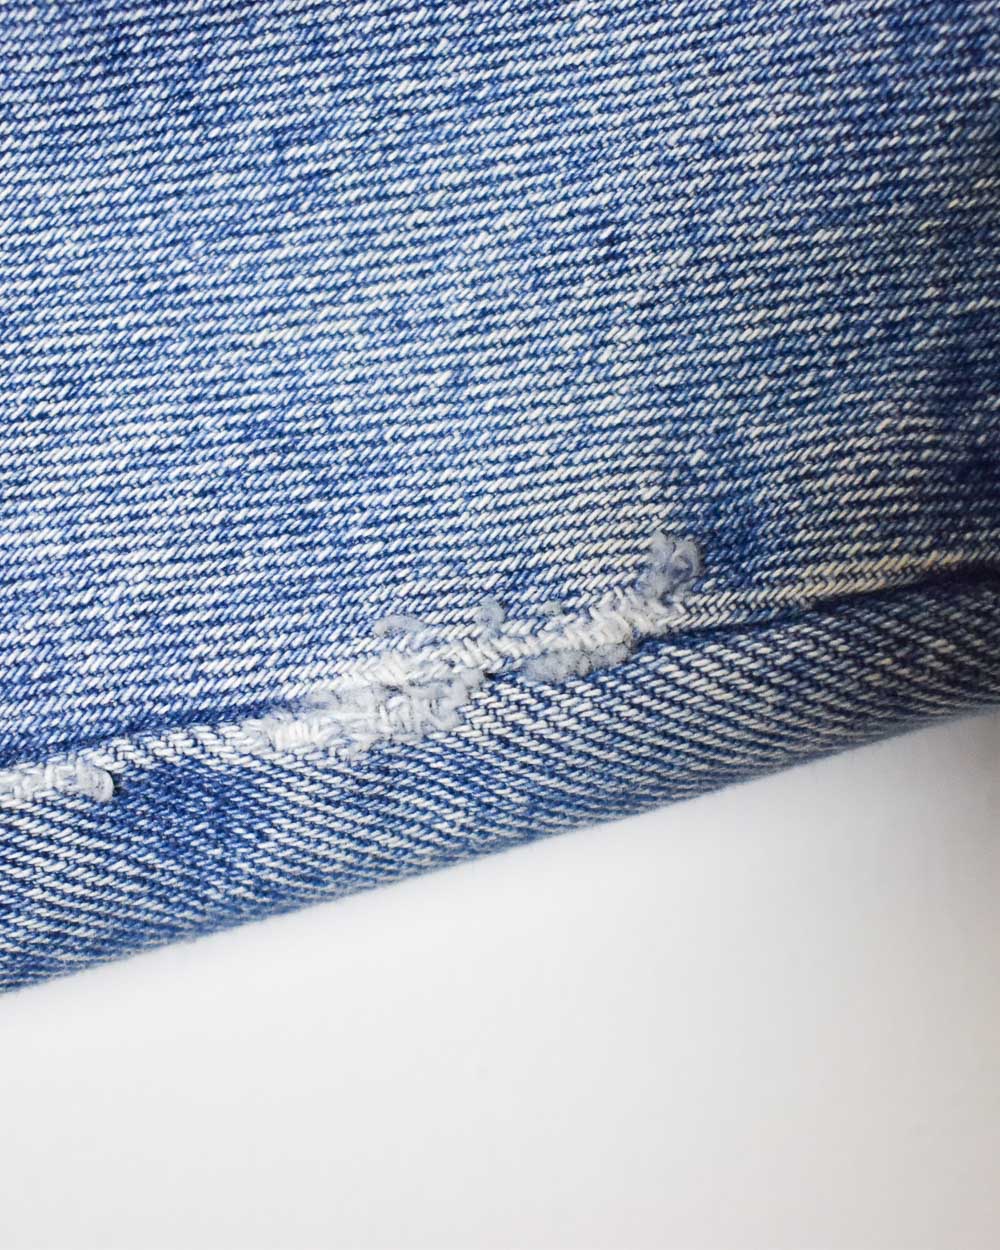 Blue Levi's Reworked Jeans Denim Jacket - Small